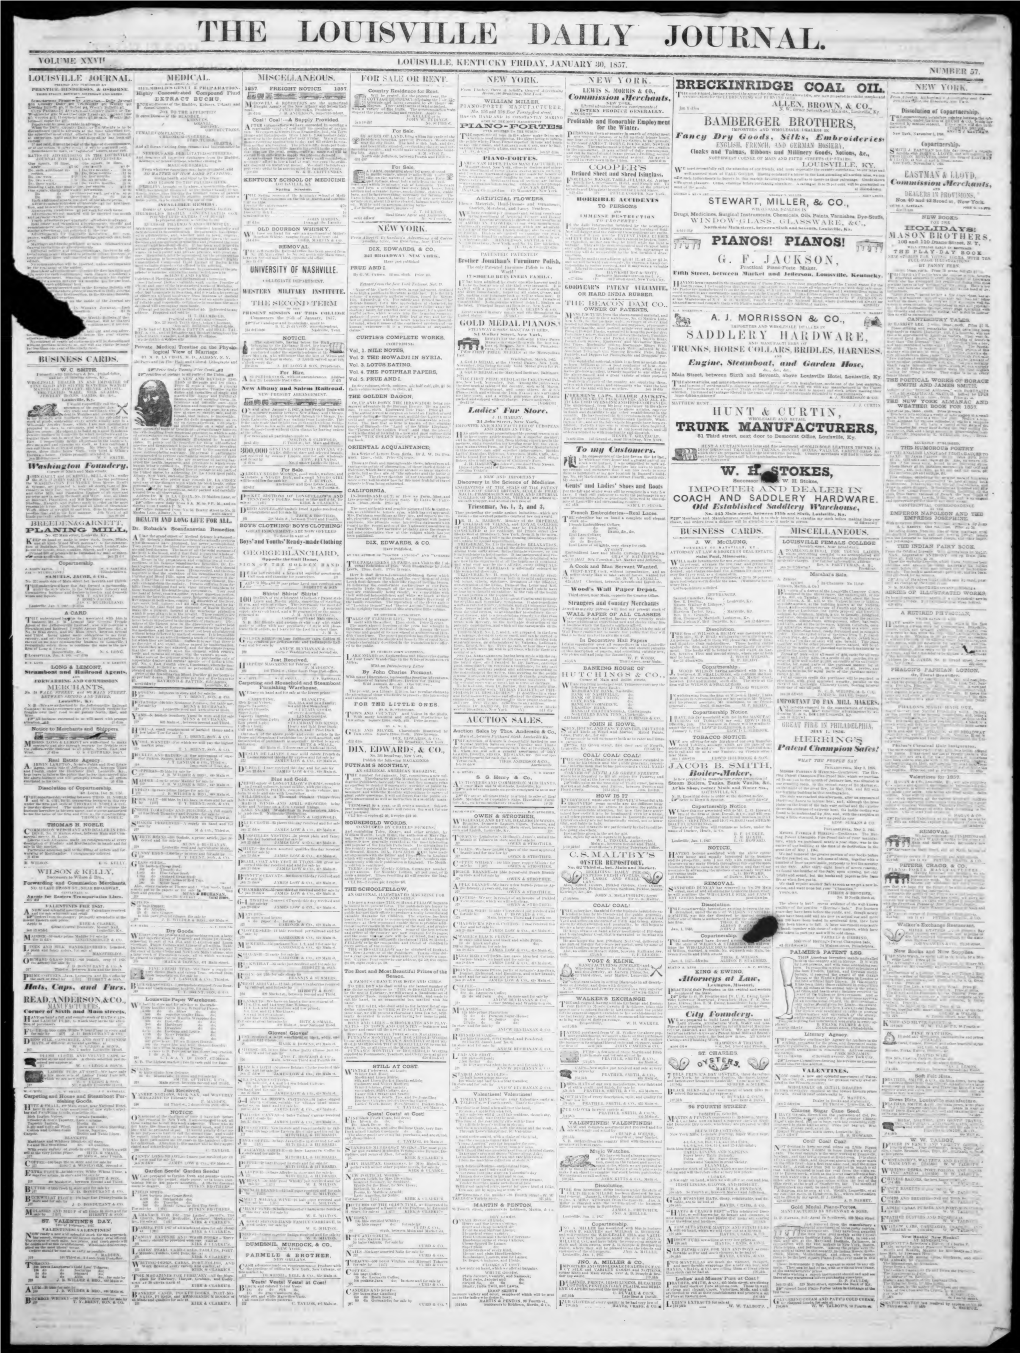 Louisville Daily Journal (Louisville, Ky. : 1833): 1857-01-30